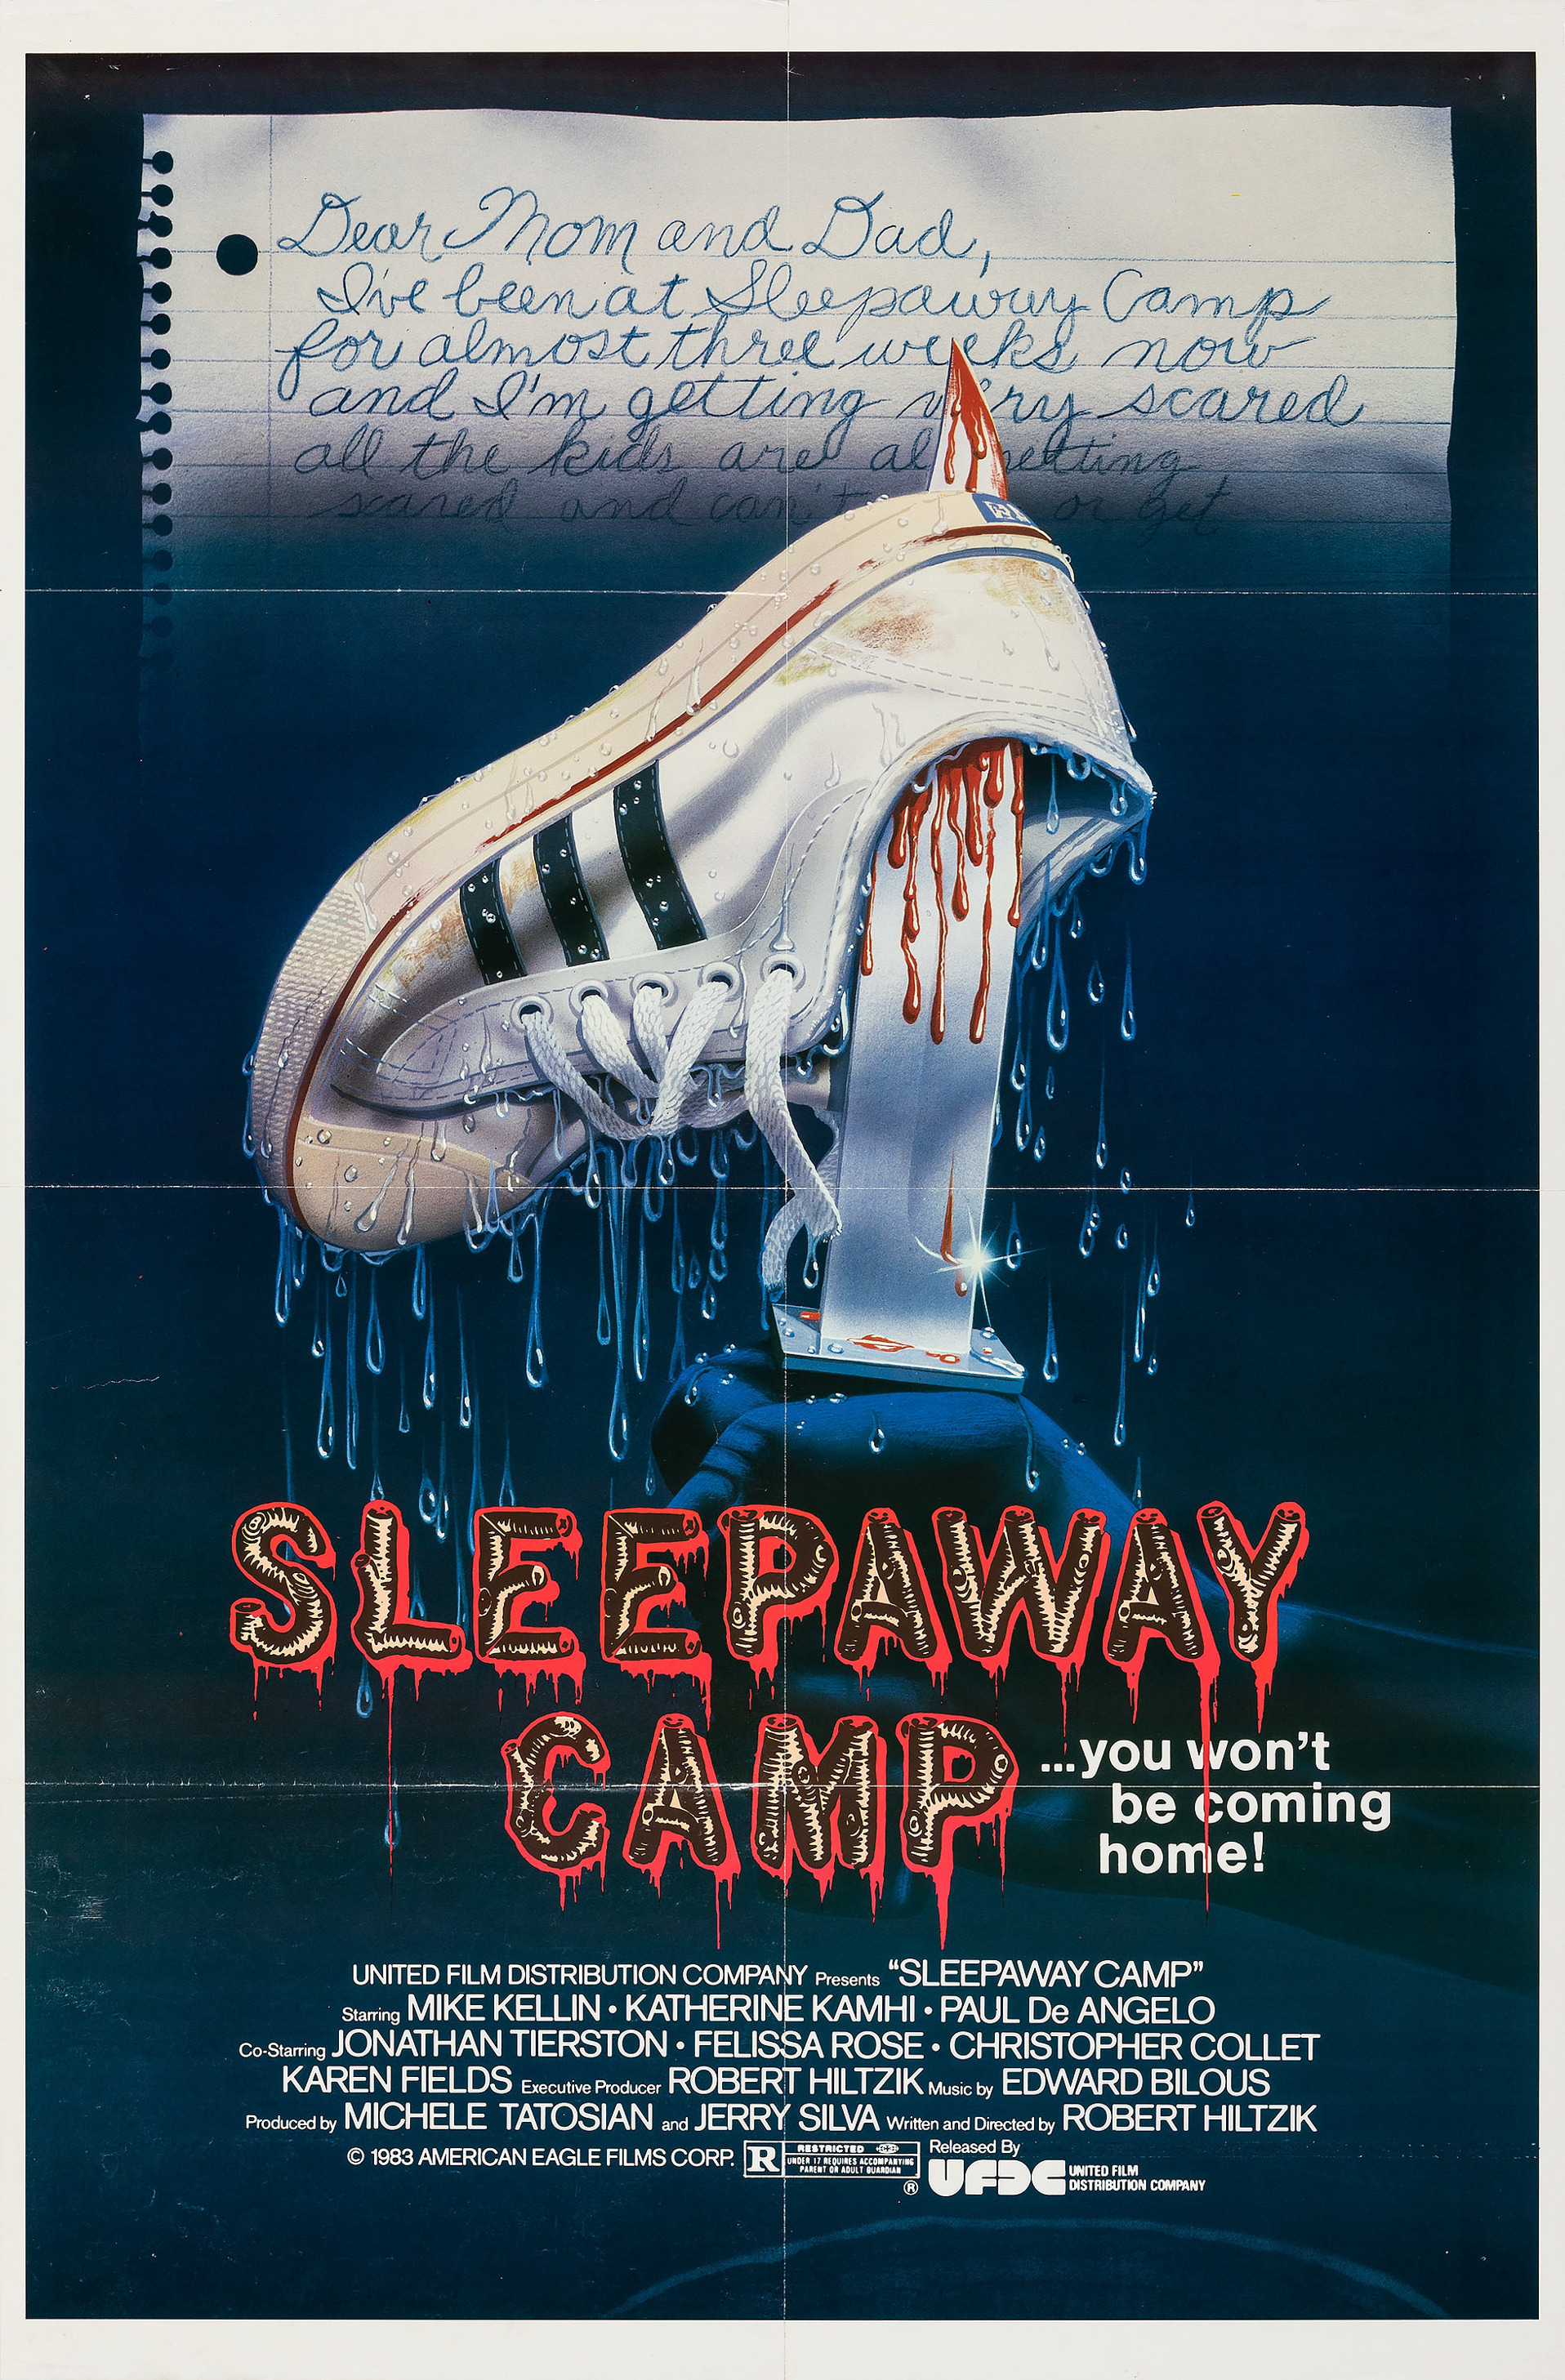 Mega Sized Movie Poster Image for Sleepaway Camp 